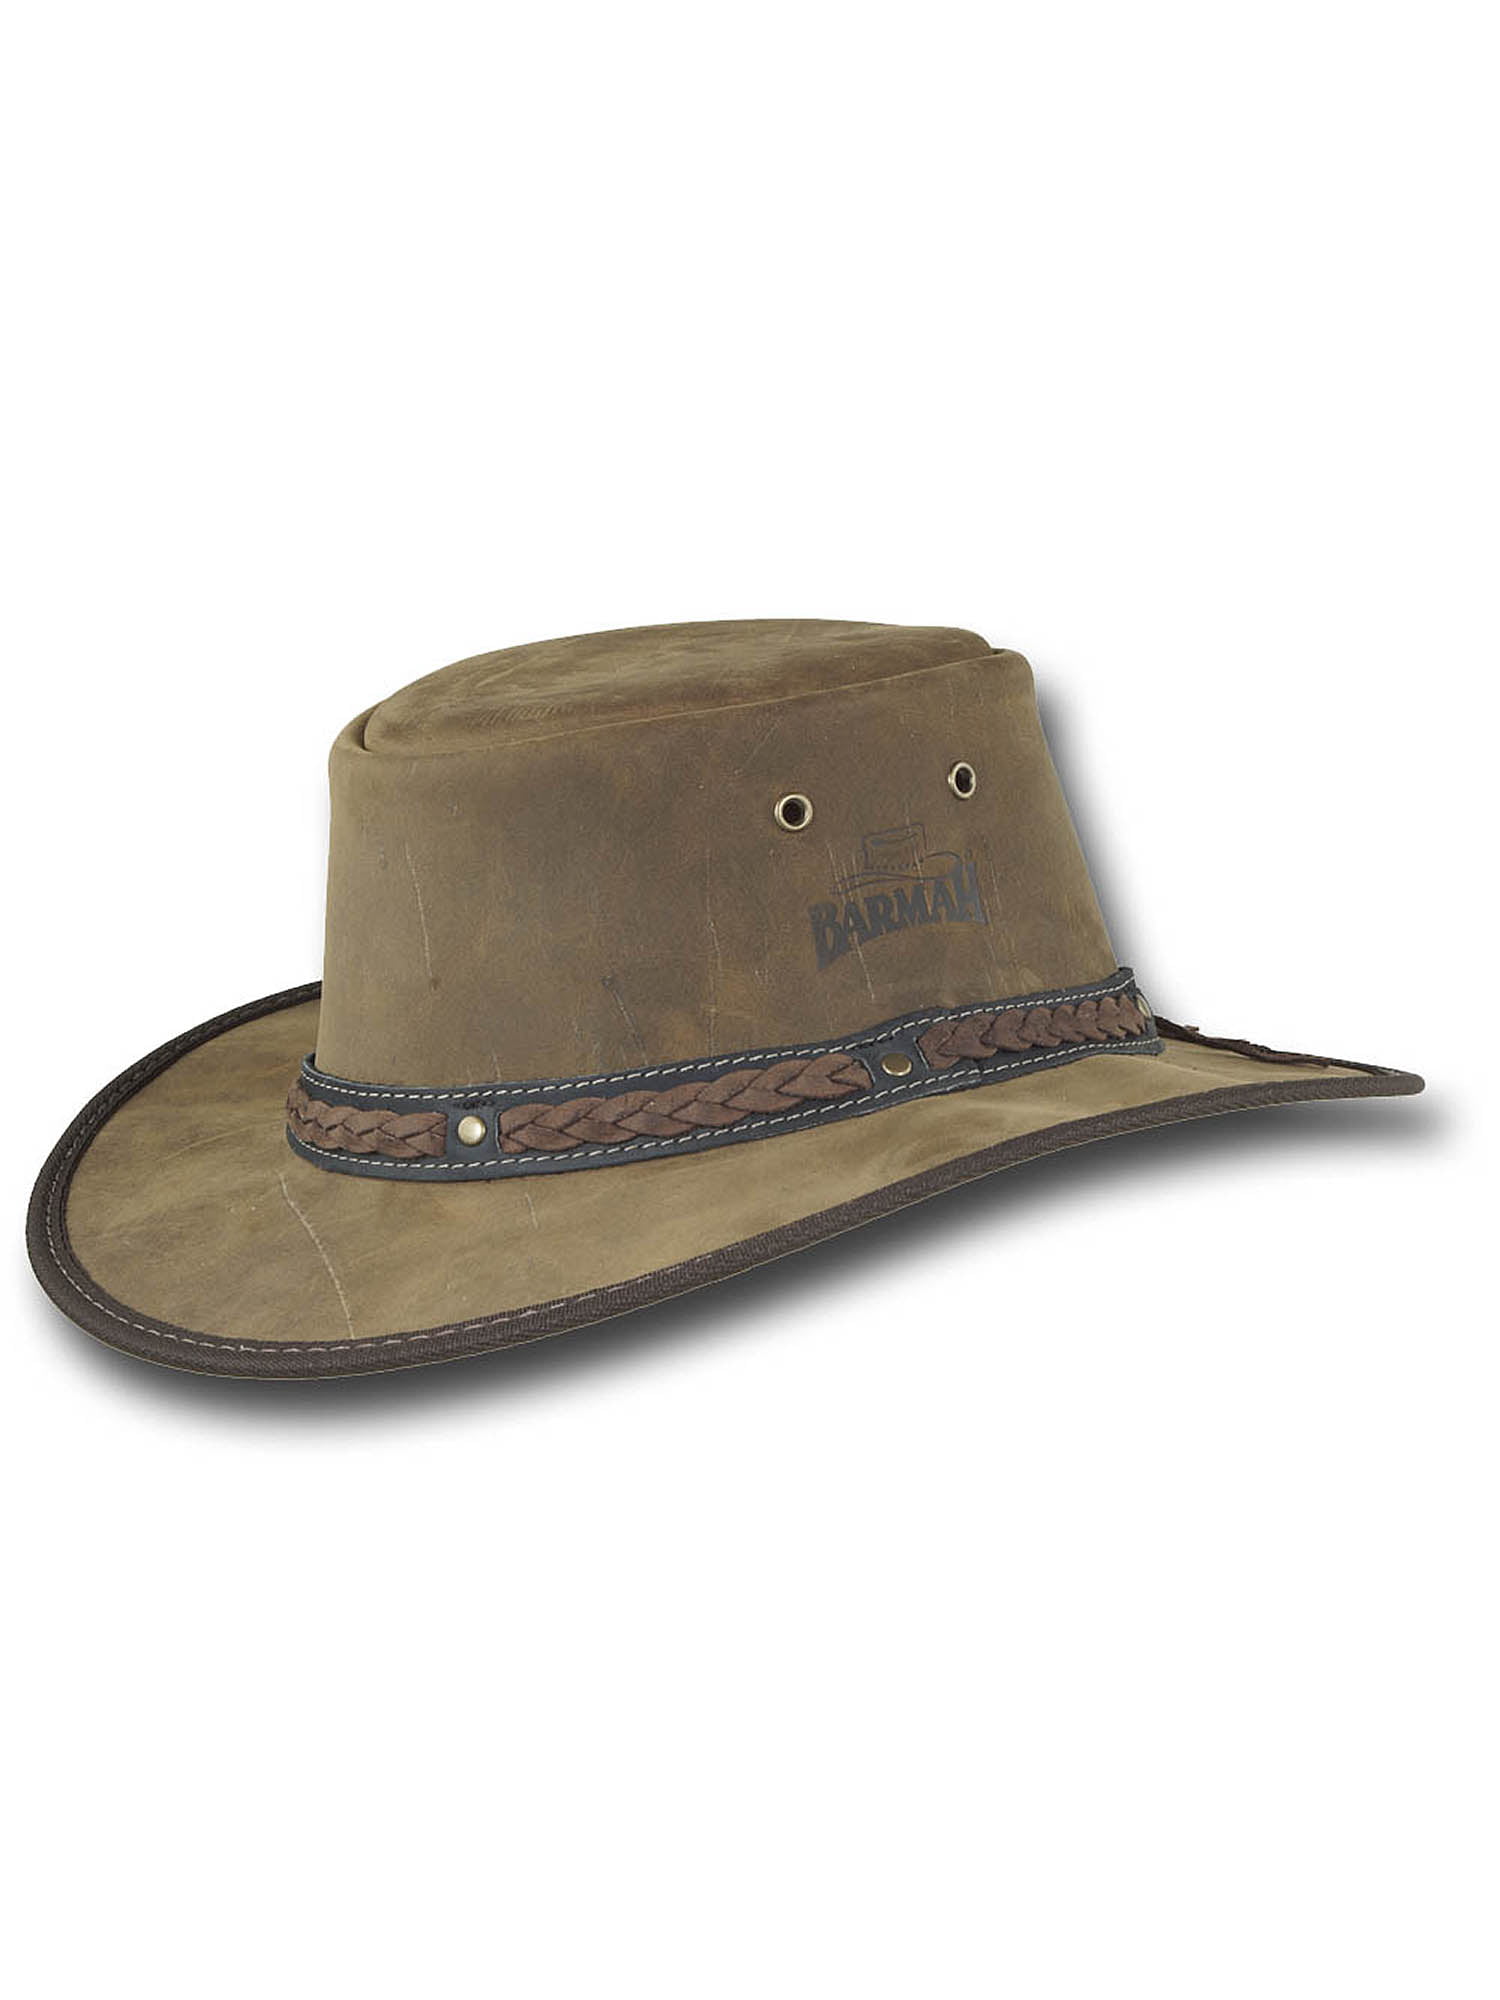 Barmah Hats Foldaway Bronco Leather Hat - Item 1060 - Walmart.com